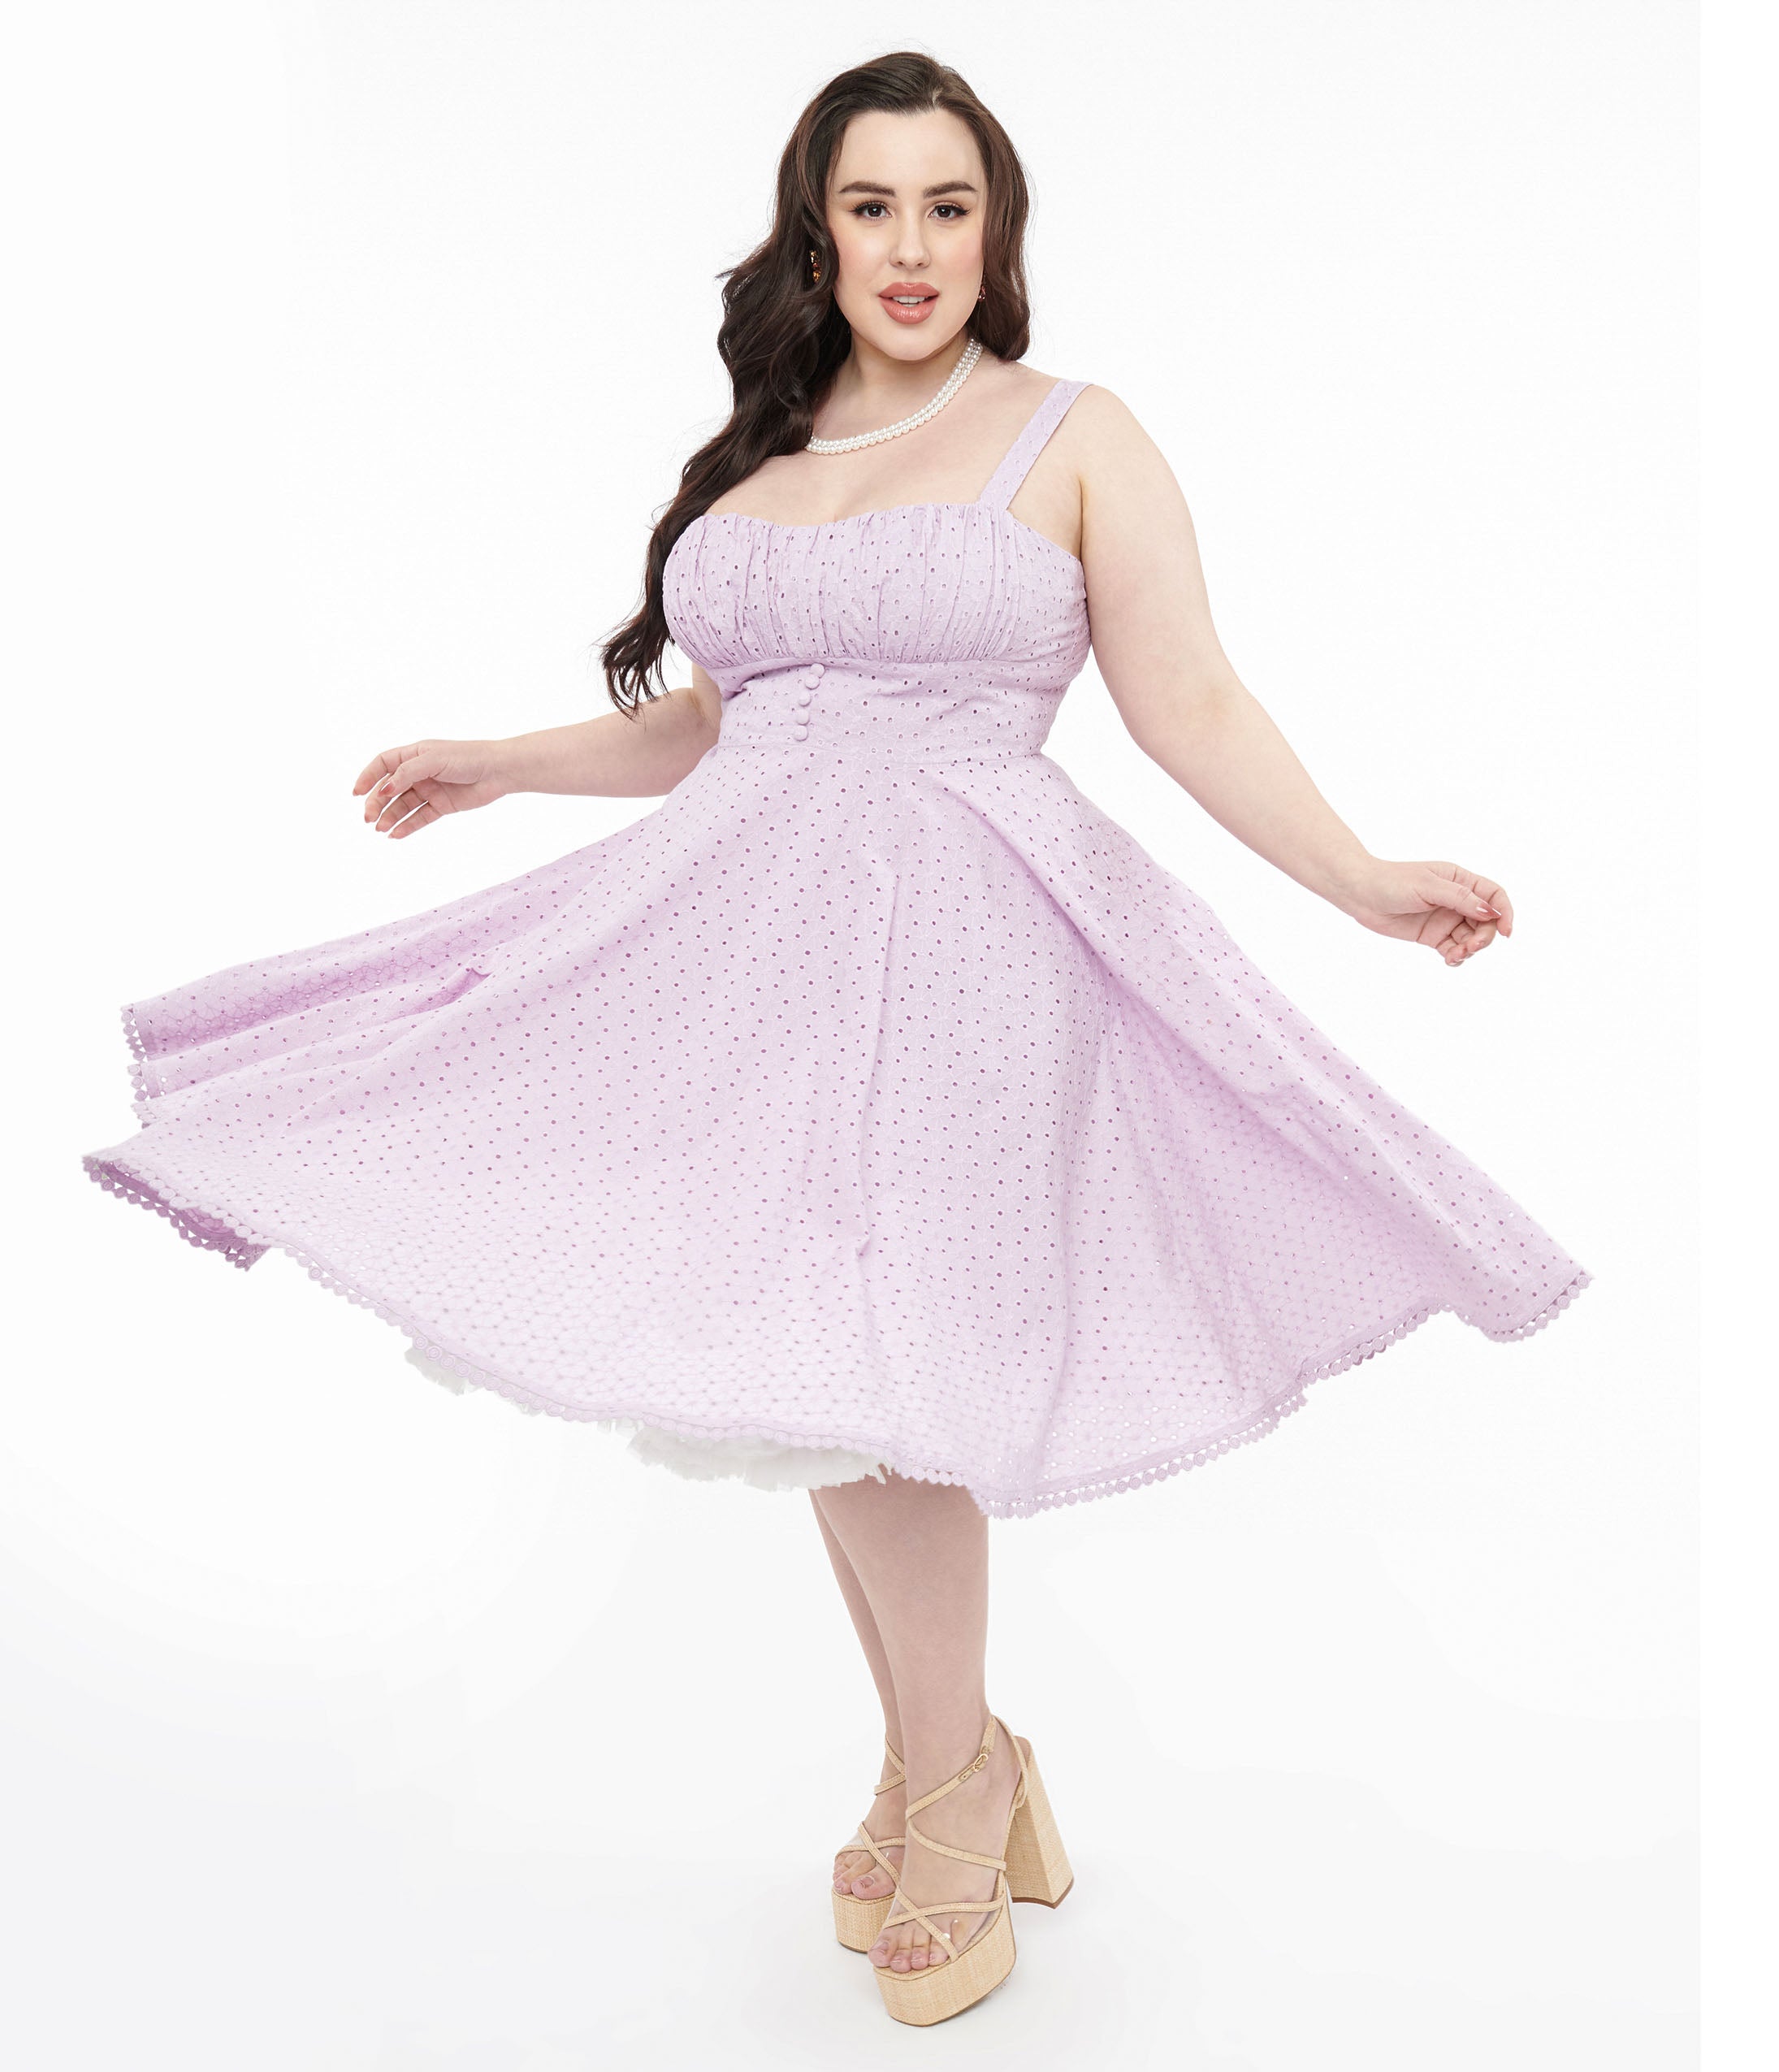 

Plus Size Lavender Cotton Eyelet Valerie Swing Dress